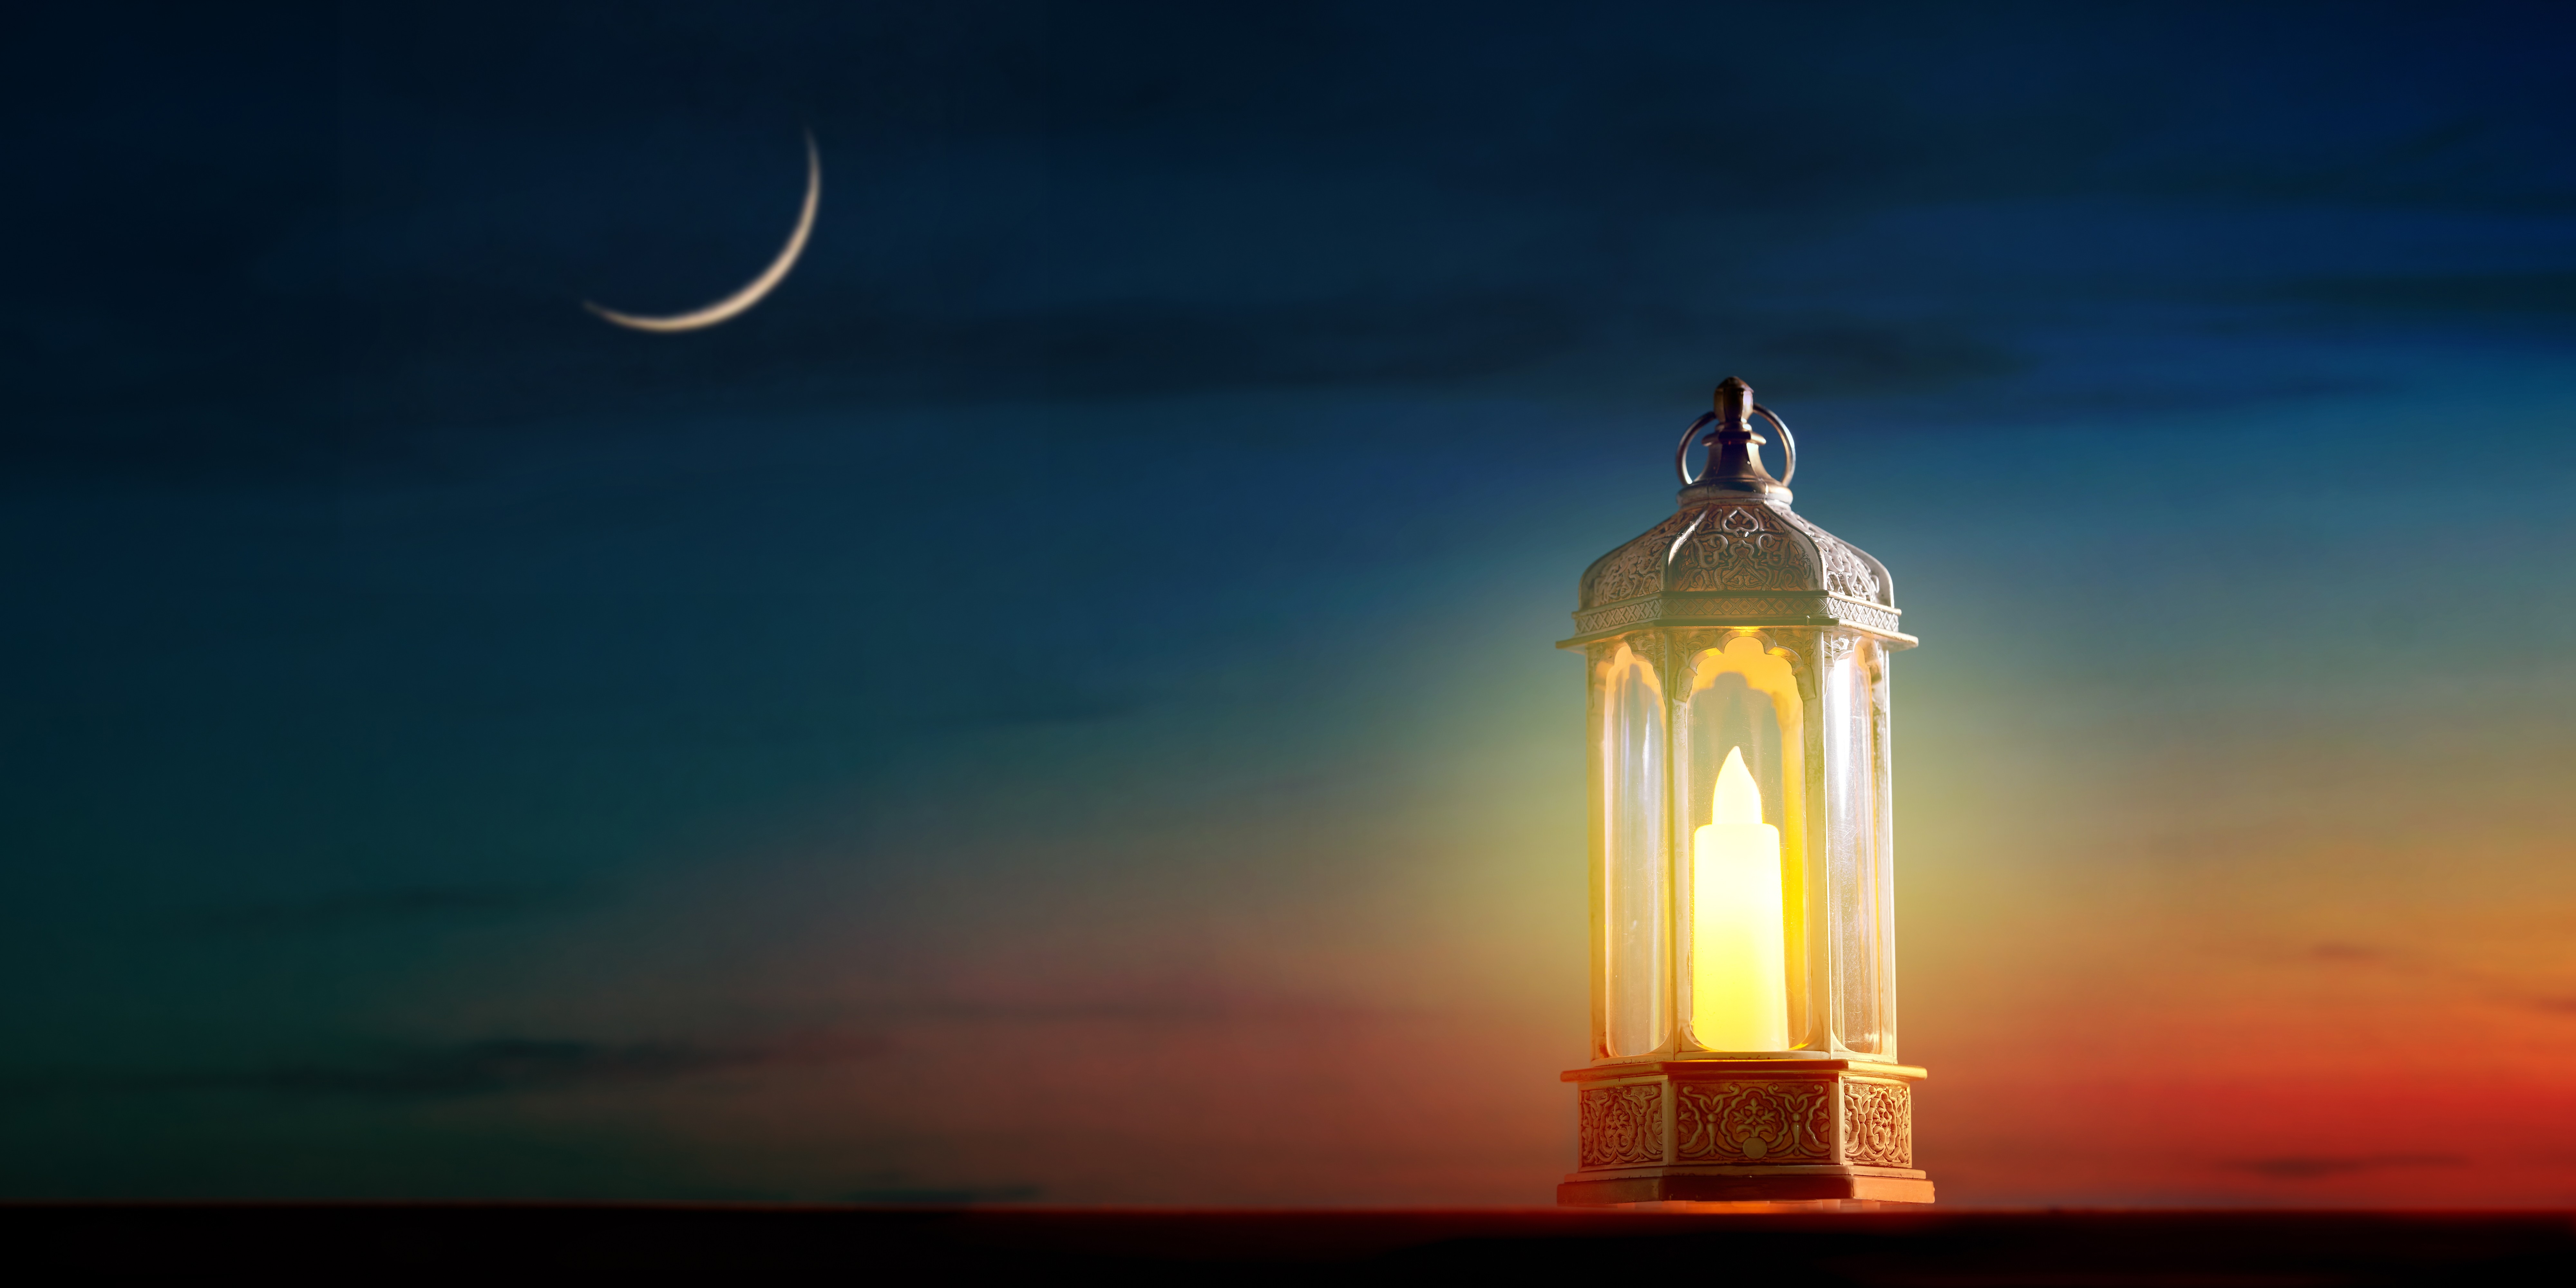 muslim-holy-month-ramadan-kareem-ornamental-arabic-lantern-with-burning-candle-glowing-with-crescent-moon.jpg